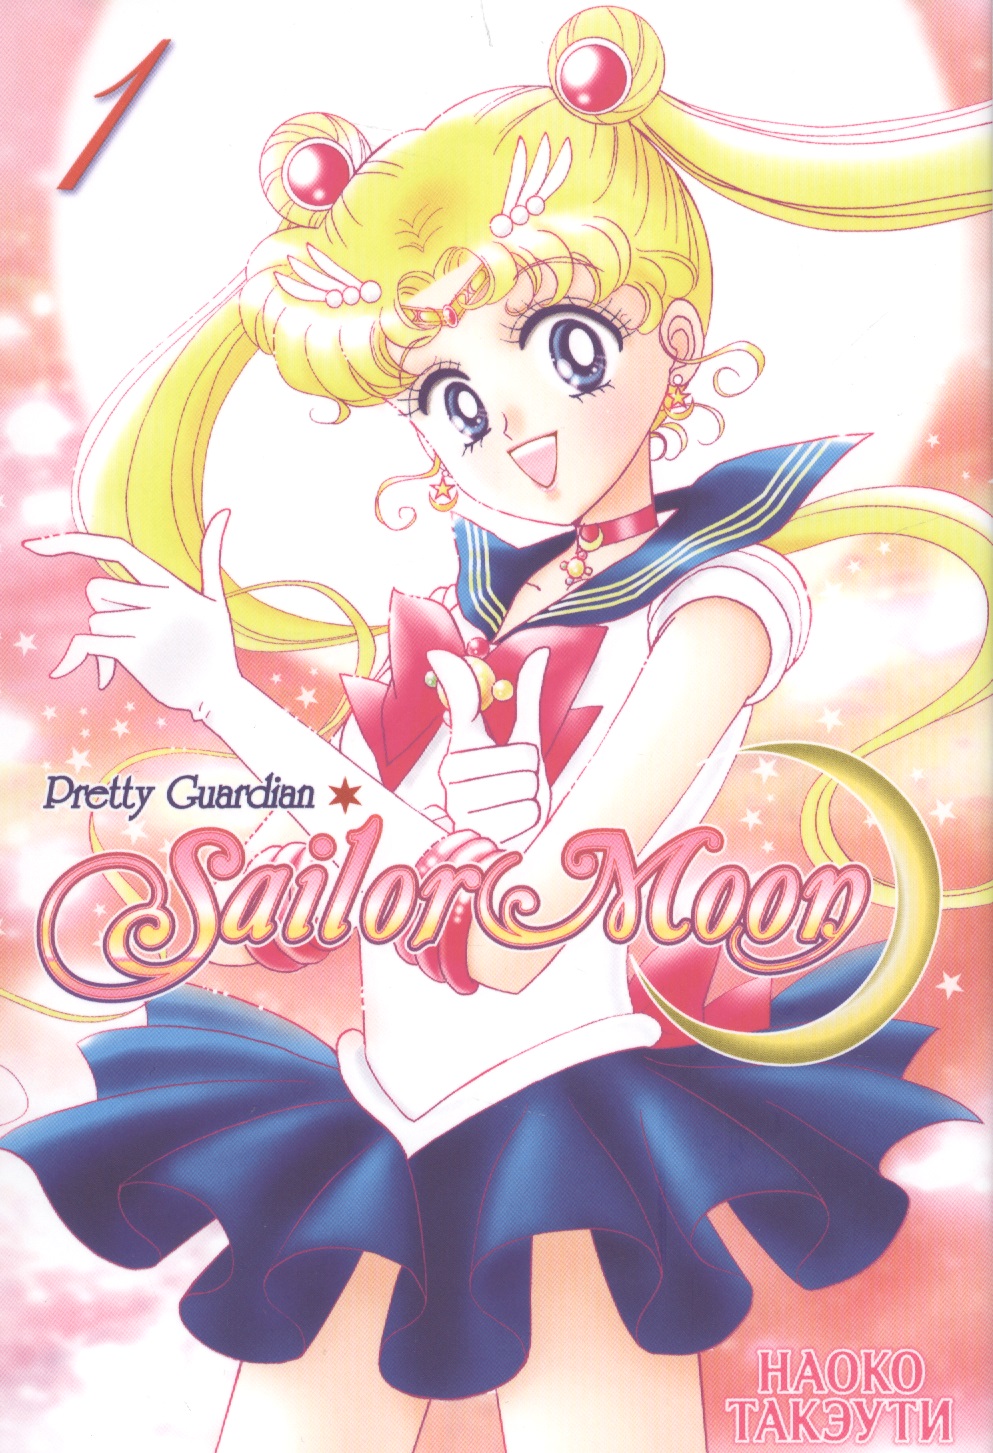 Такэути Наоко Sailor Moon. Том 1. такэути наоко sailor moon том 6